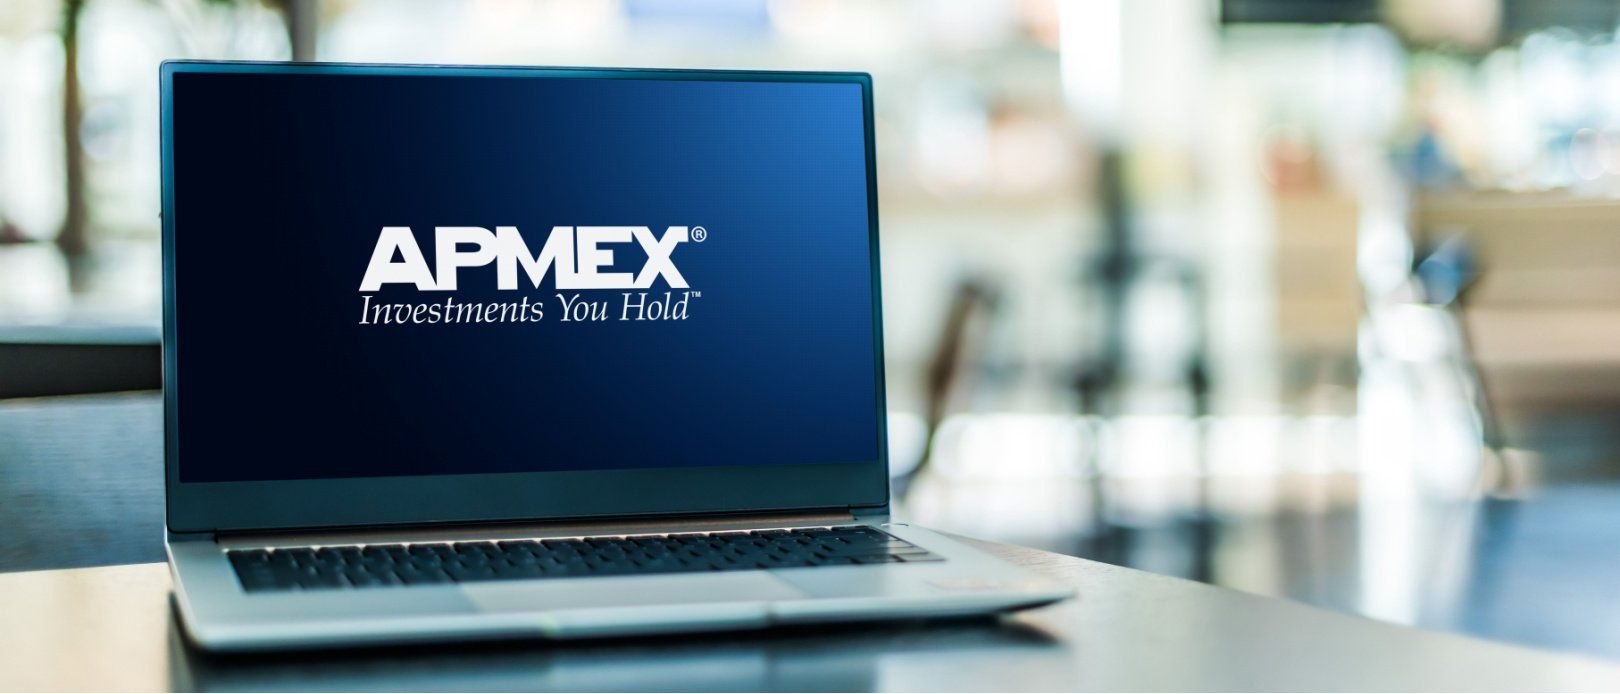 APMEX logo on a laptop screen